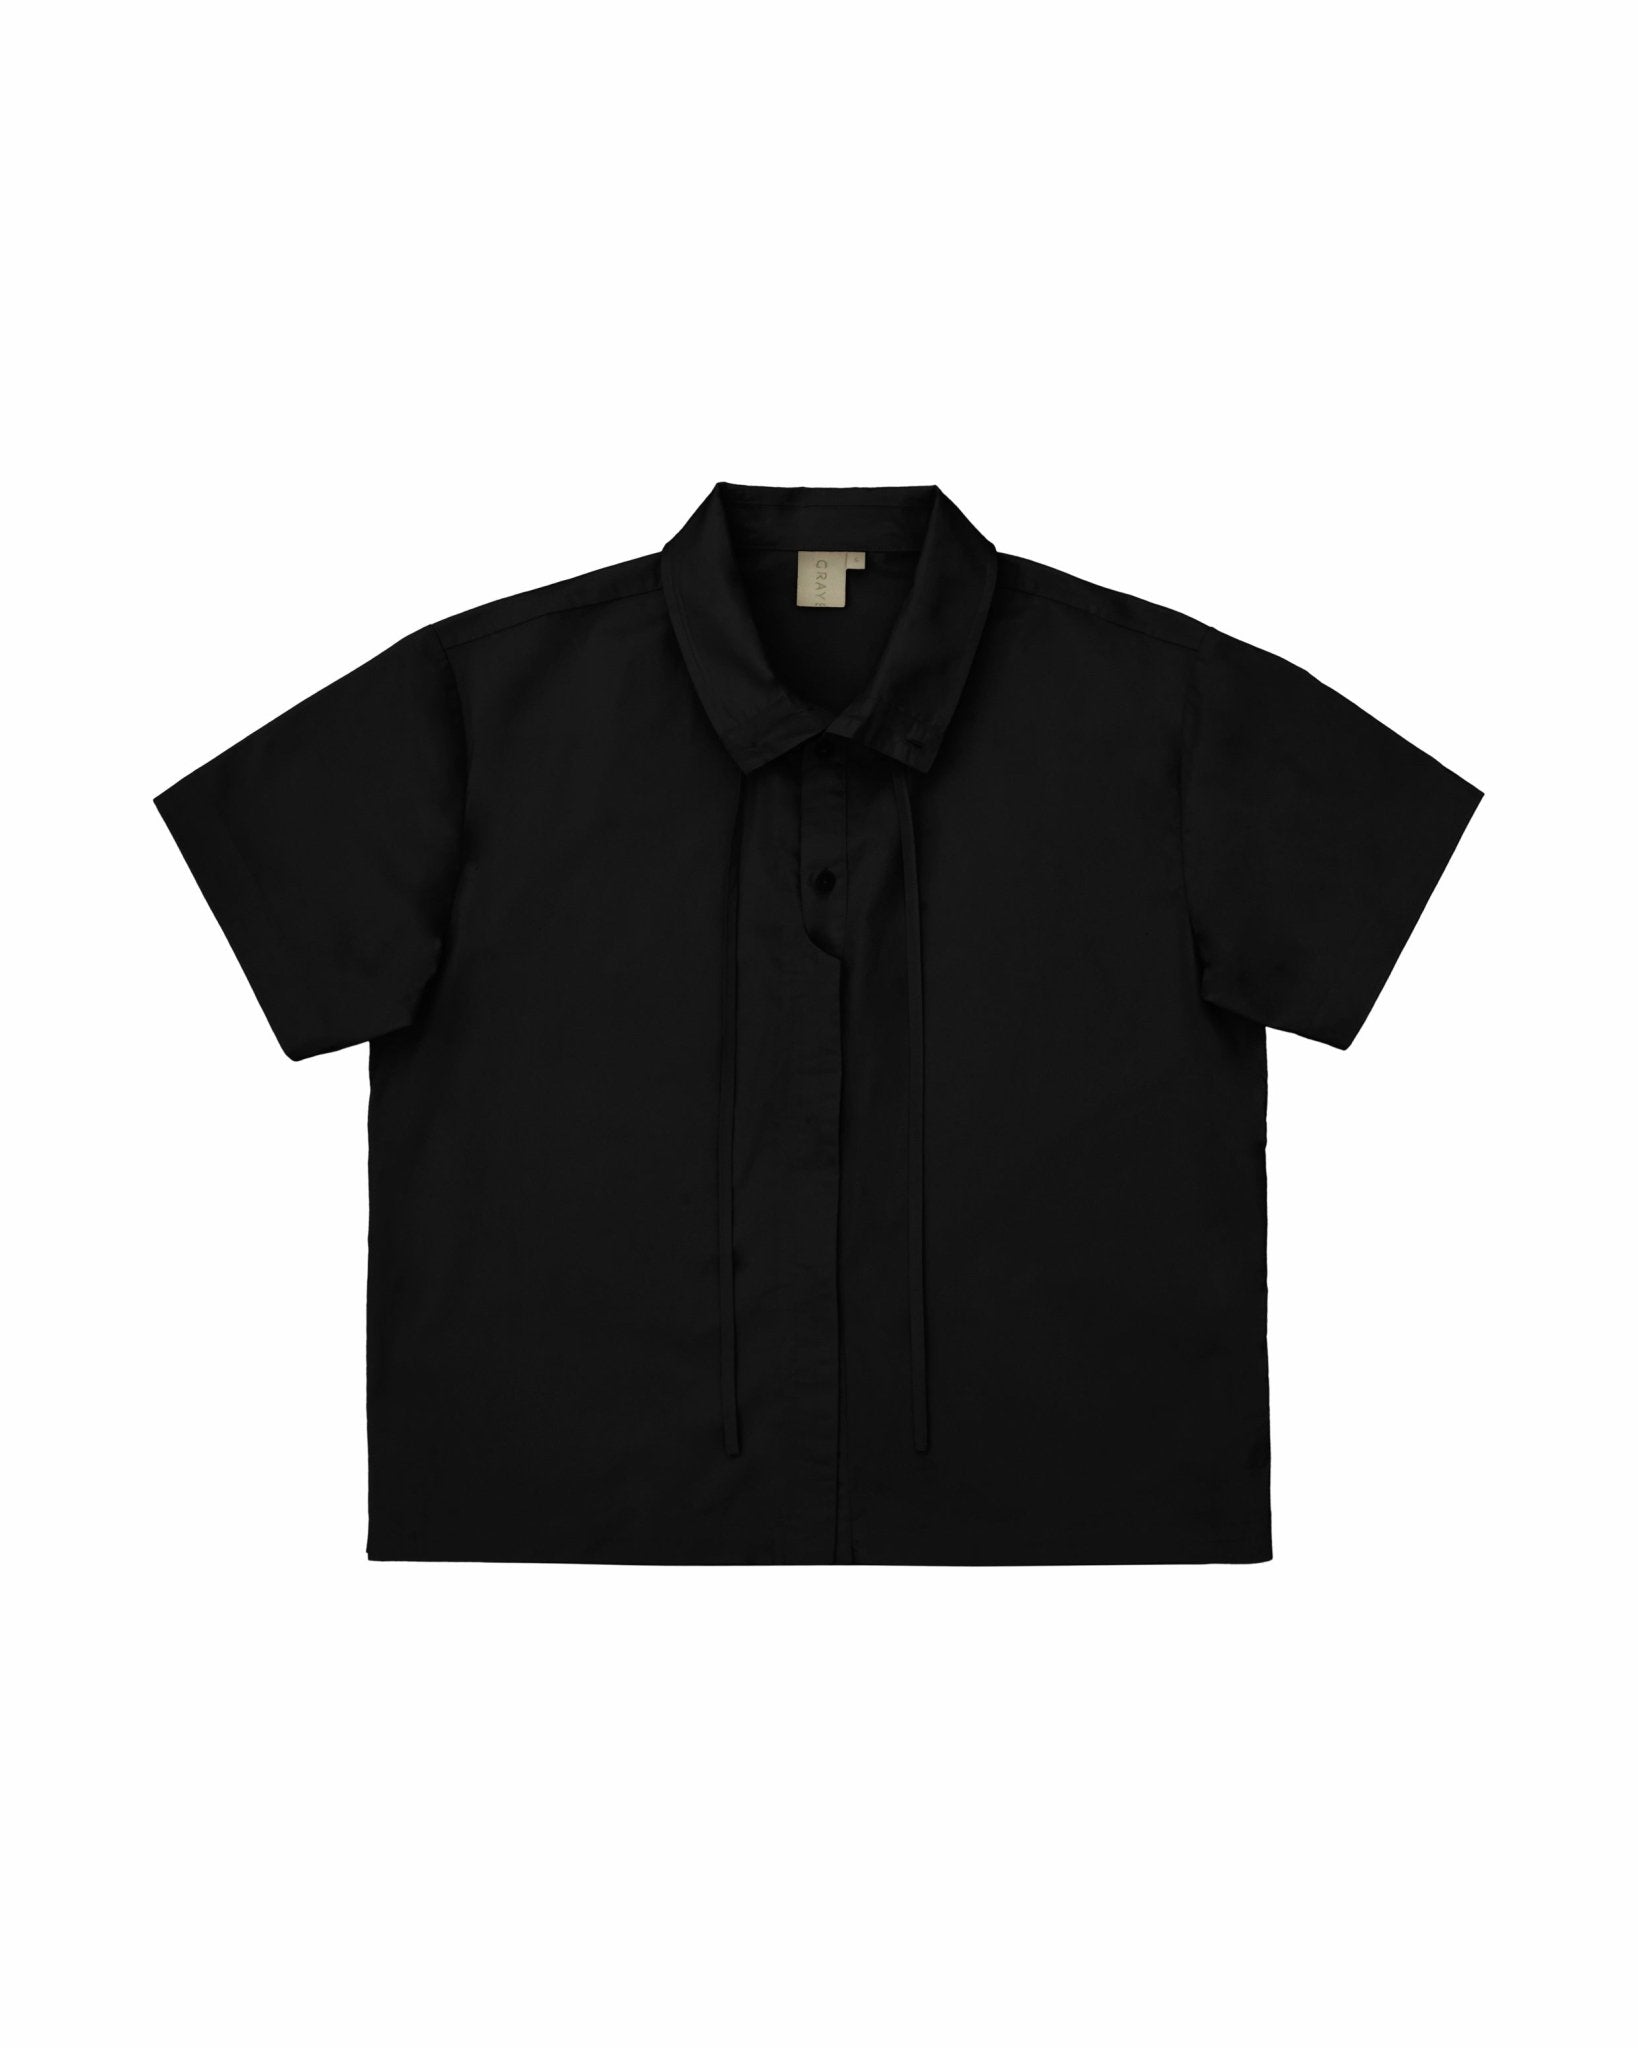 Cropped Tie Shirt - Black - G R A Y E